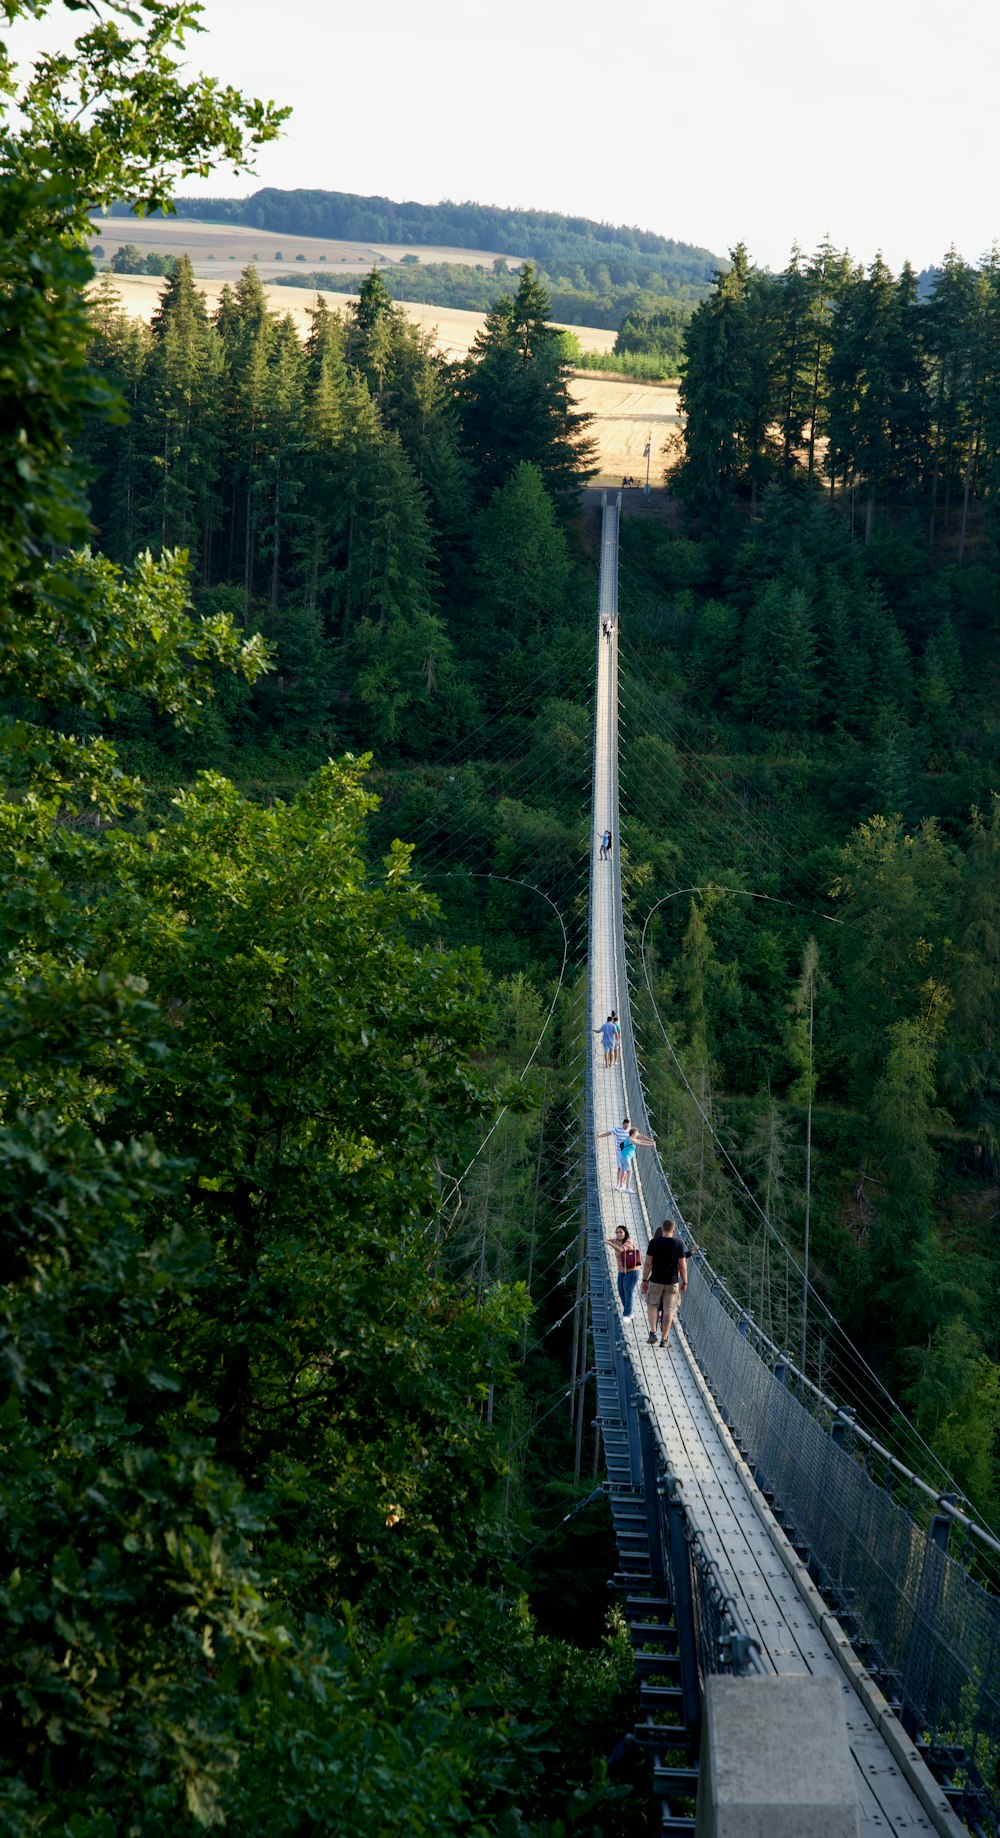 a couple of people walking across a suspension bridge